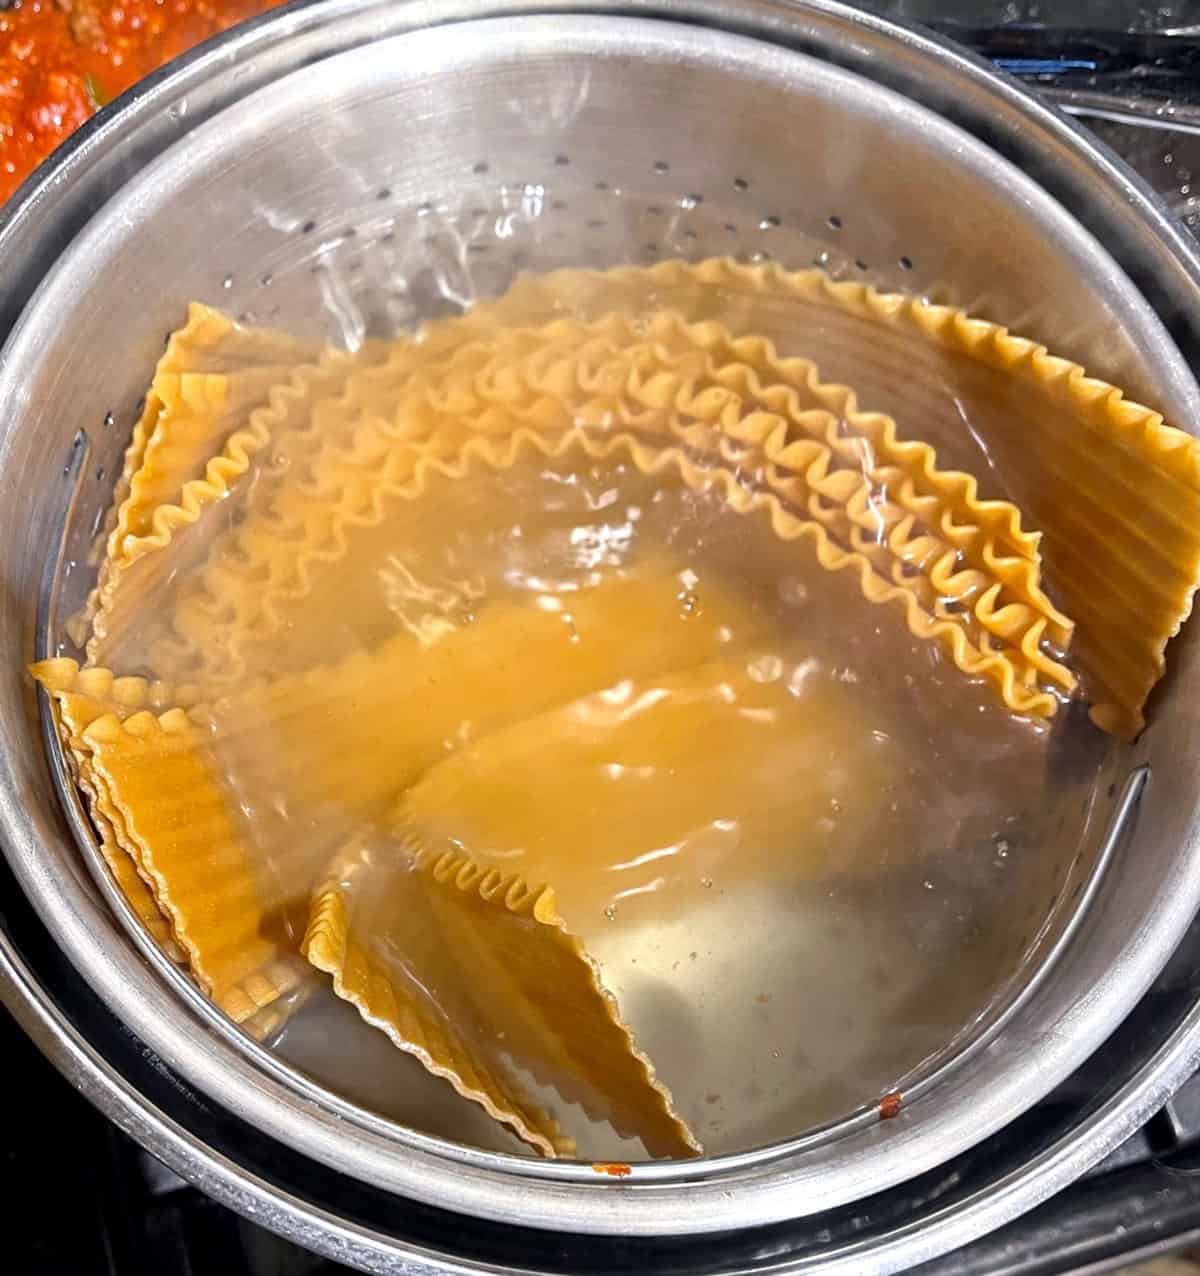 Lasagna noodles cooking in water.